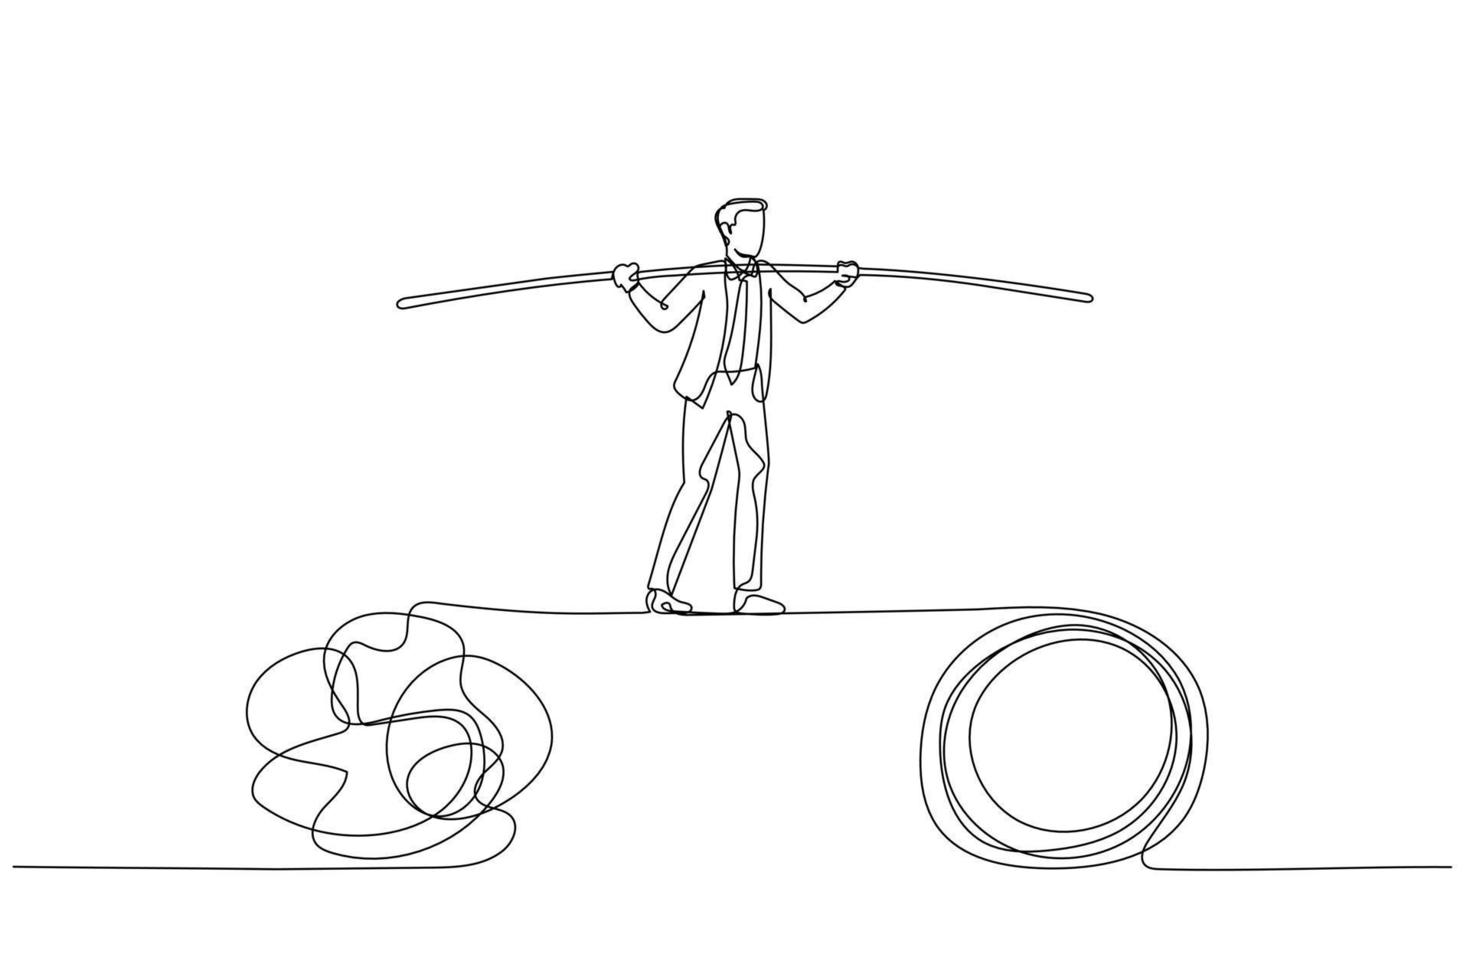 Cartoon of businessman walk on tight rope balancing between problem. Single line art style vector